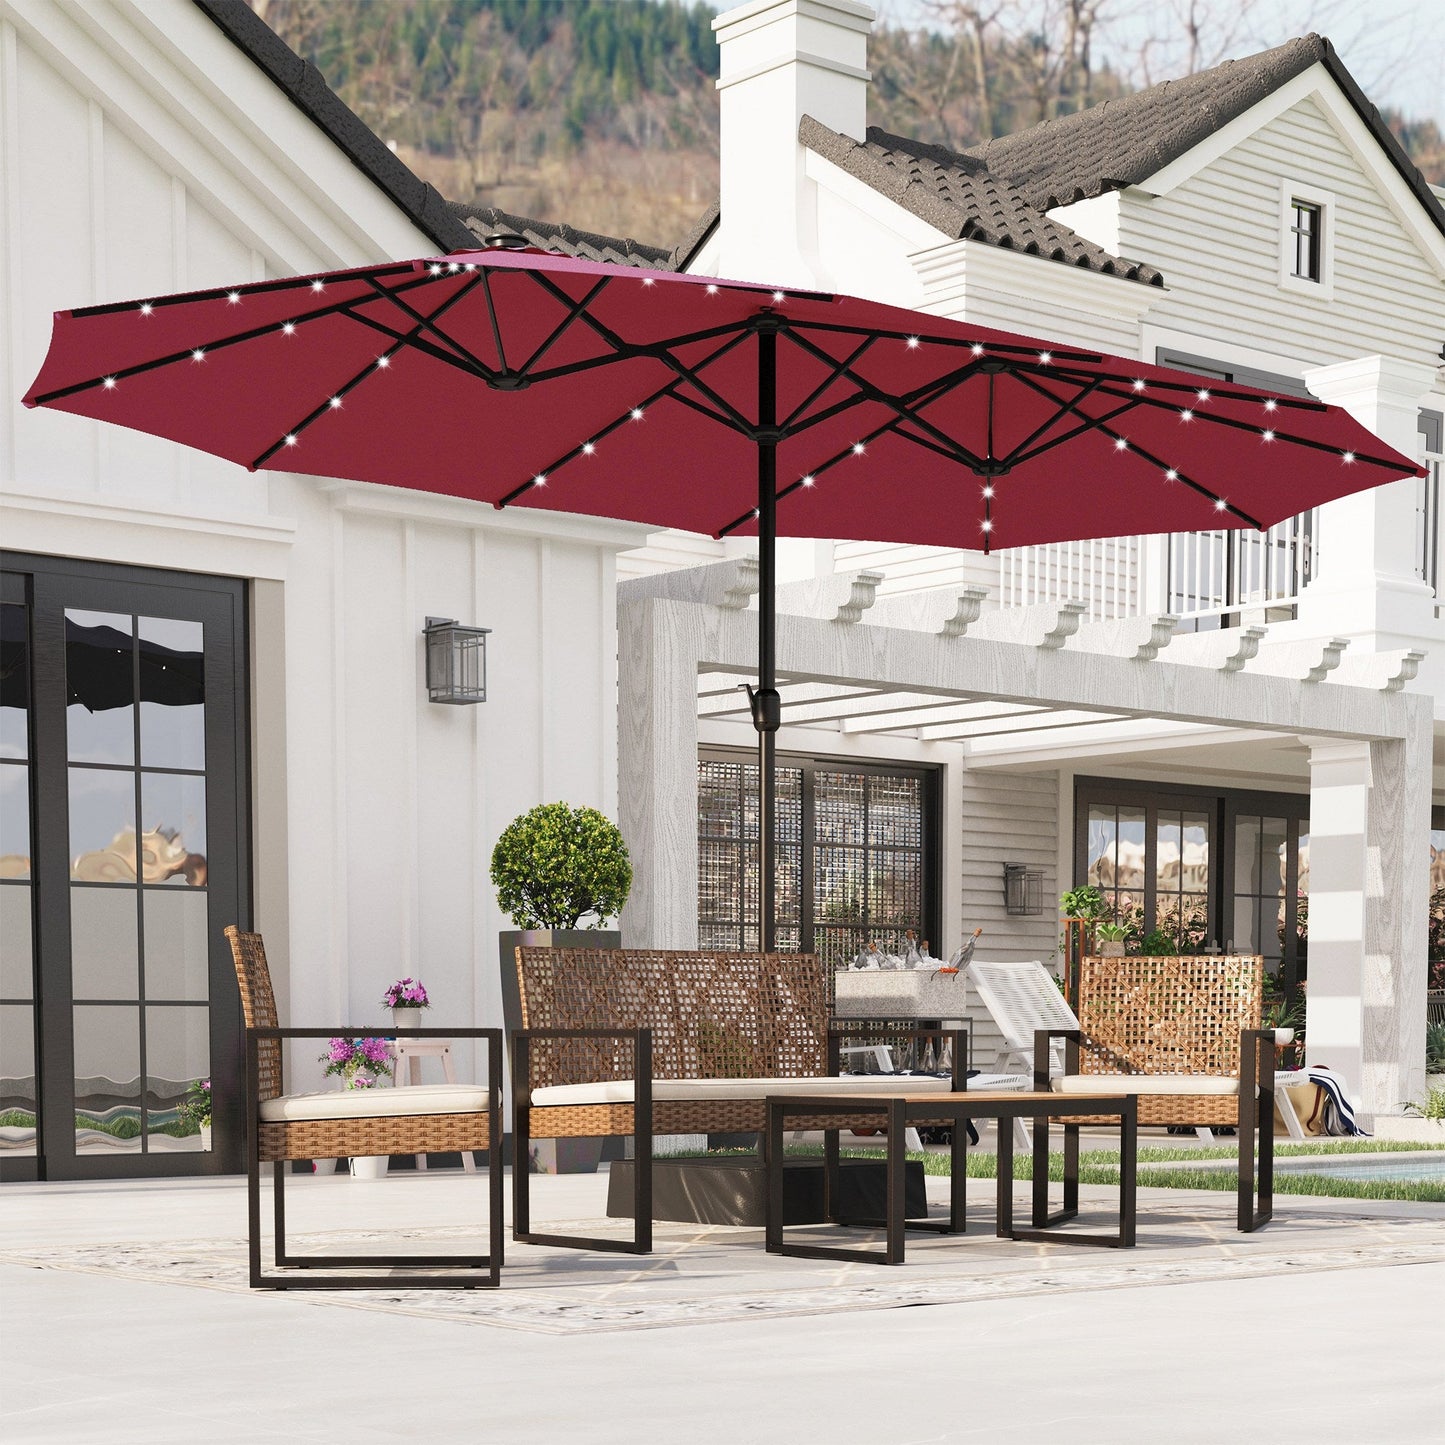 Sophia & William 15FT Outdoor Patio Umbrella Extra Large Double-Sided Garden Umbrella with Crank Handle, Red